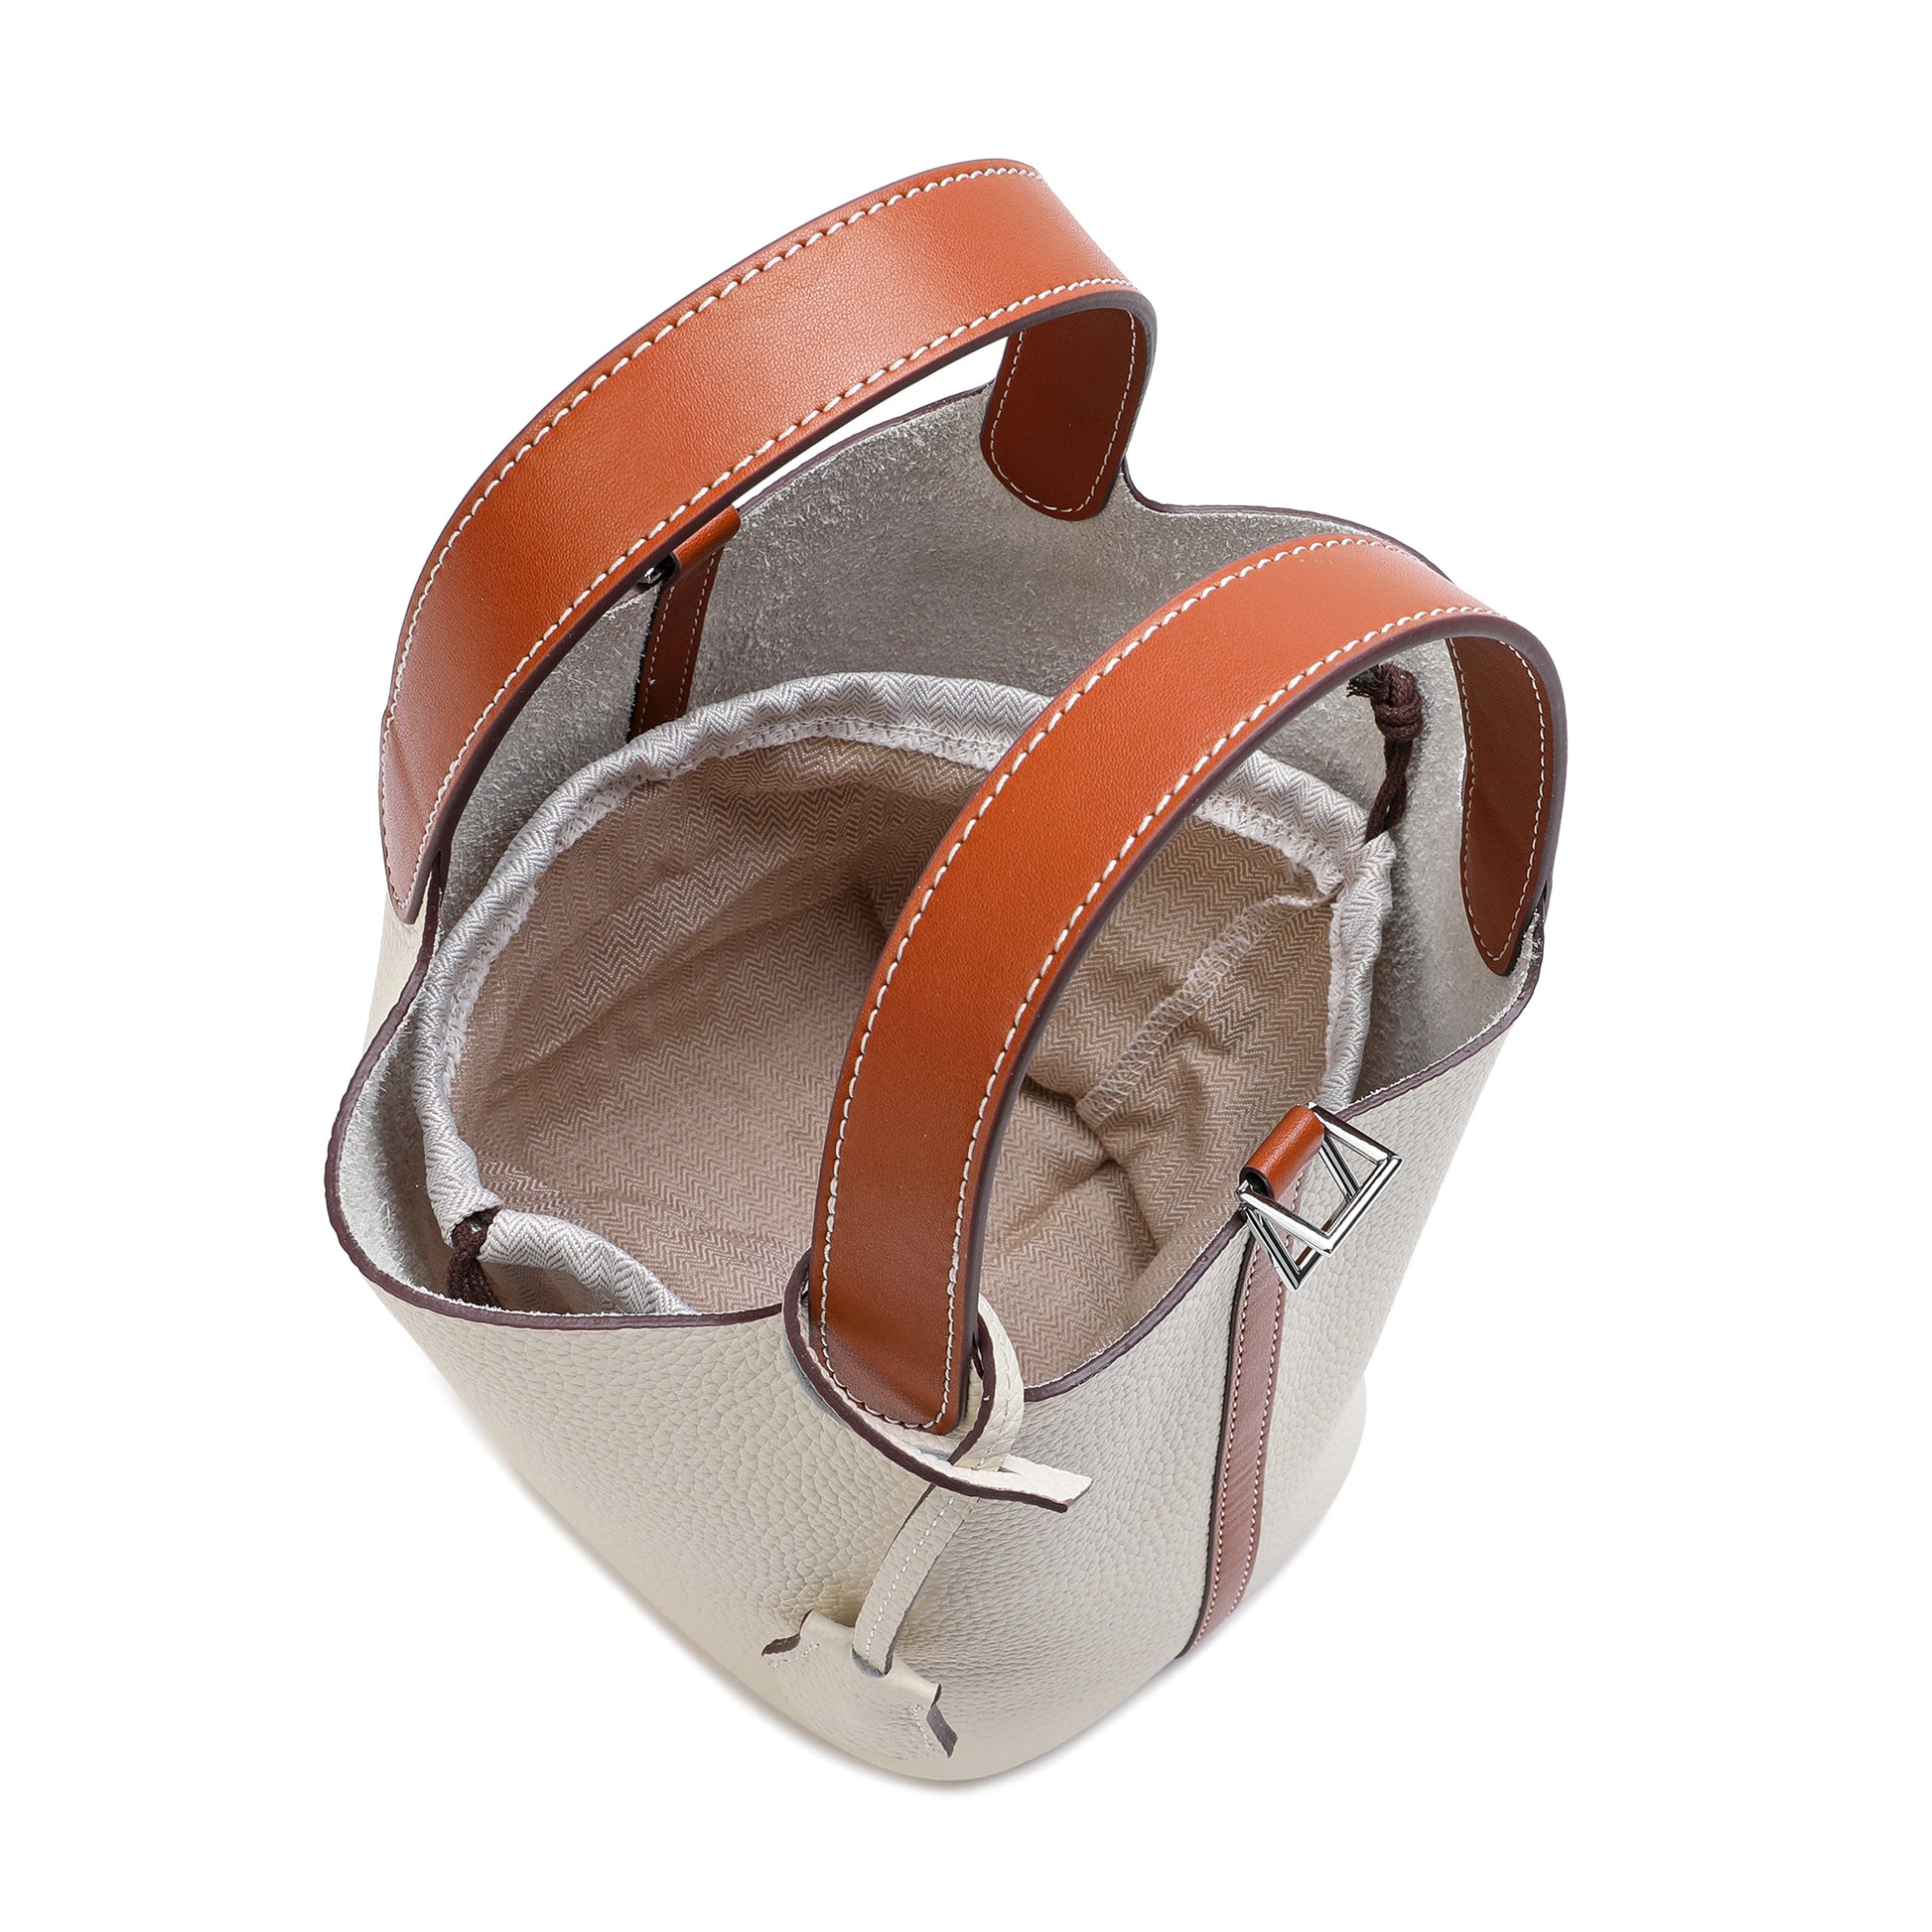 Tiffany & Fred Full-Grain Soft Leather Top Handle Shoulder Bag